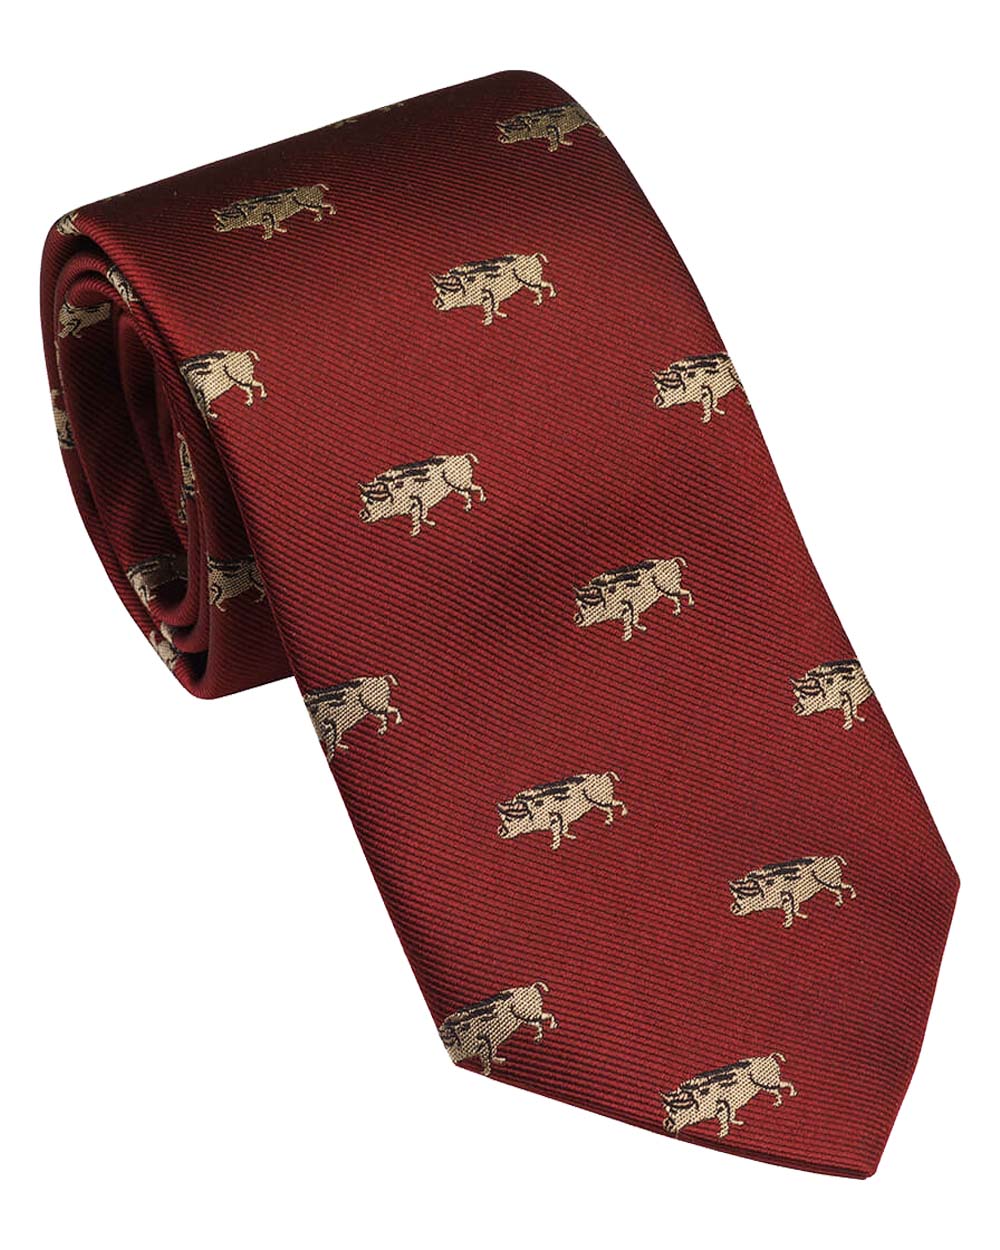 Vintage Red coloured Laksen Wild Boar Tie on White background 